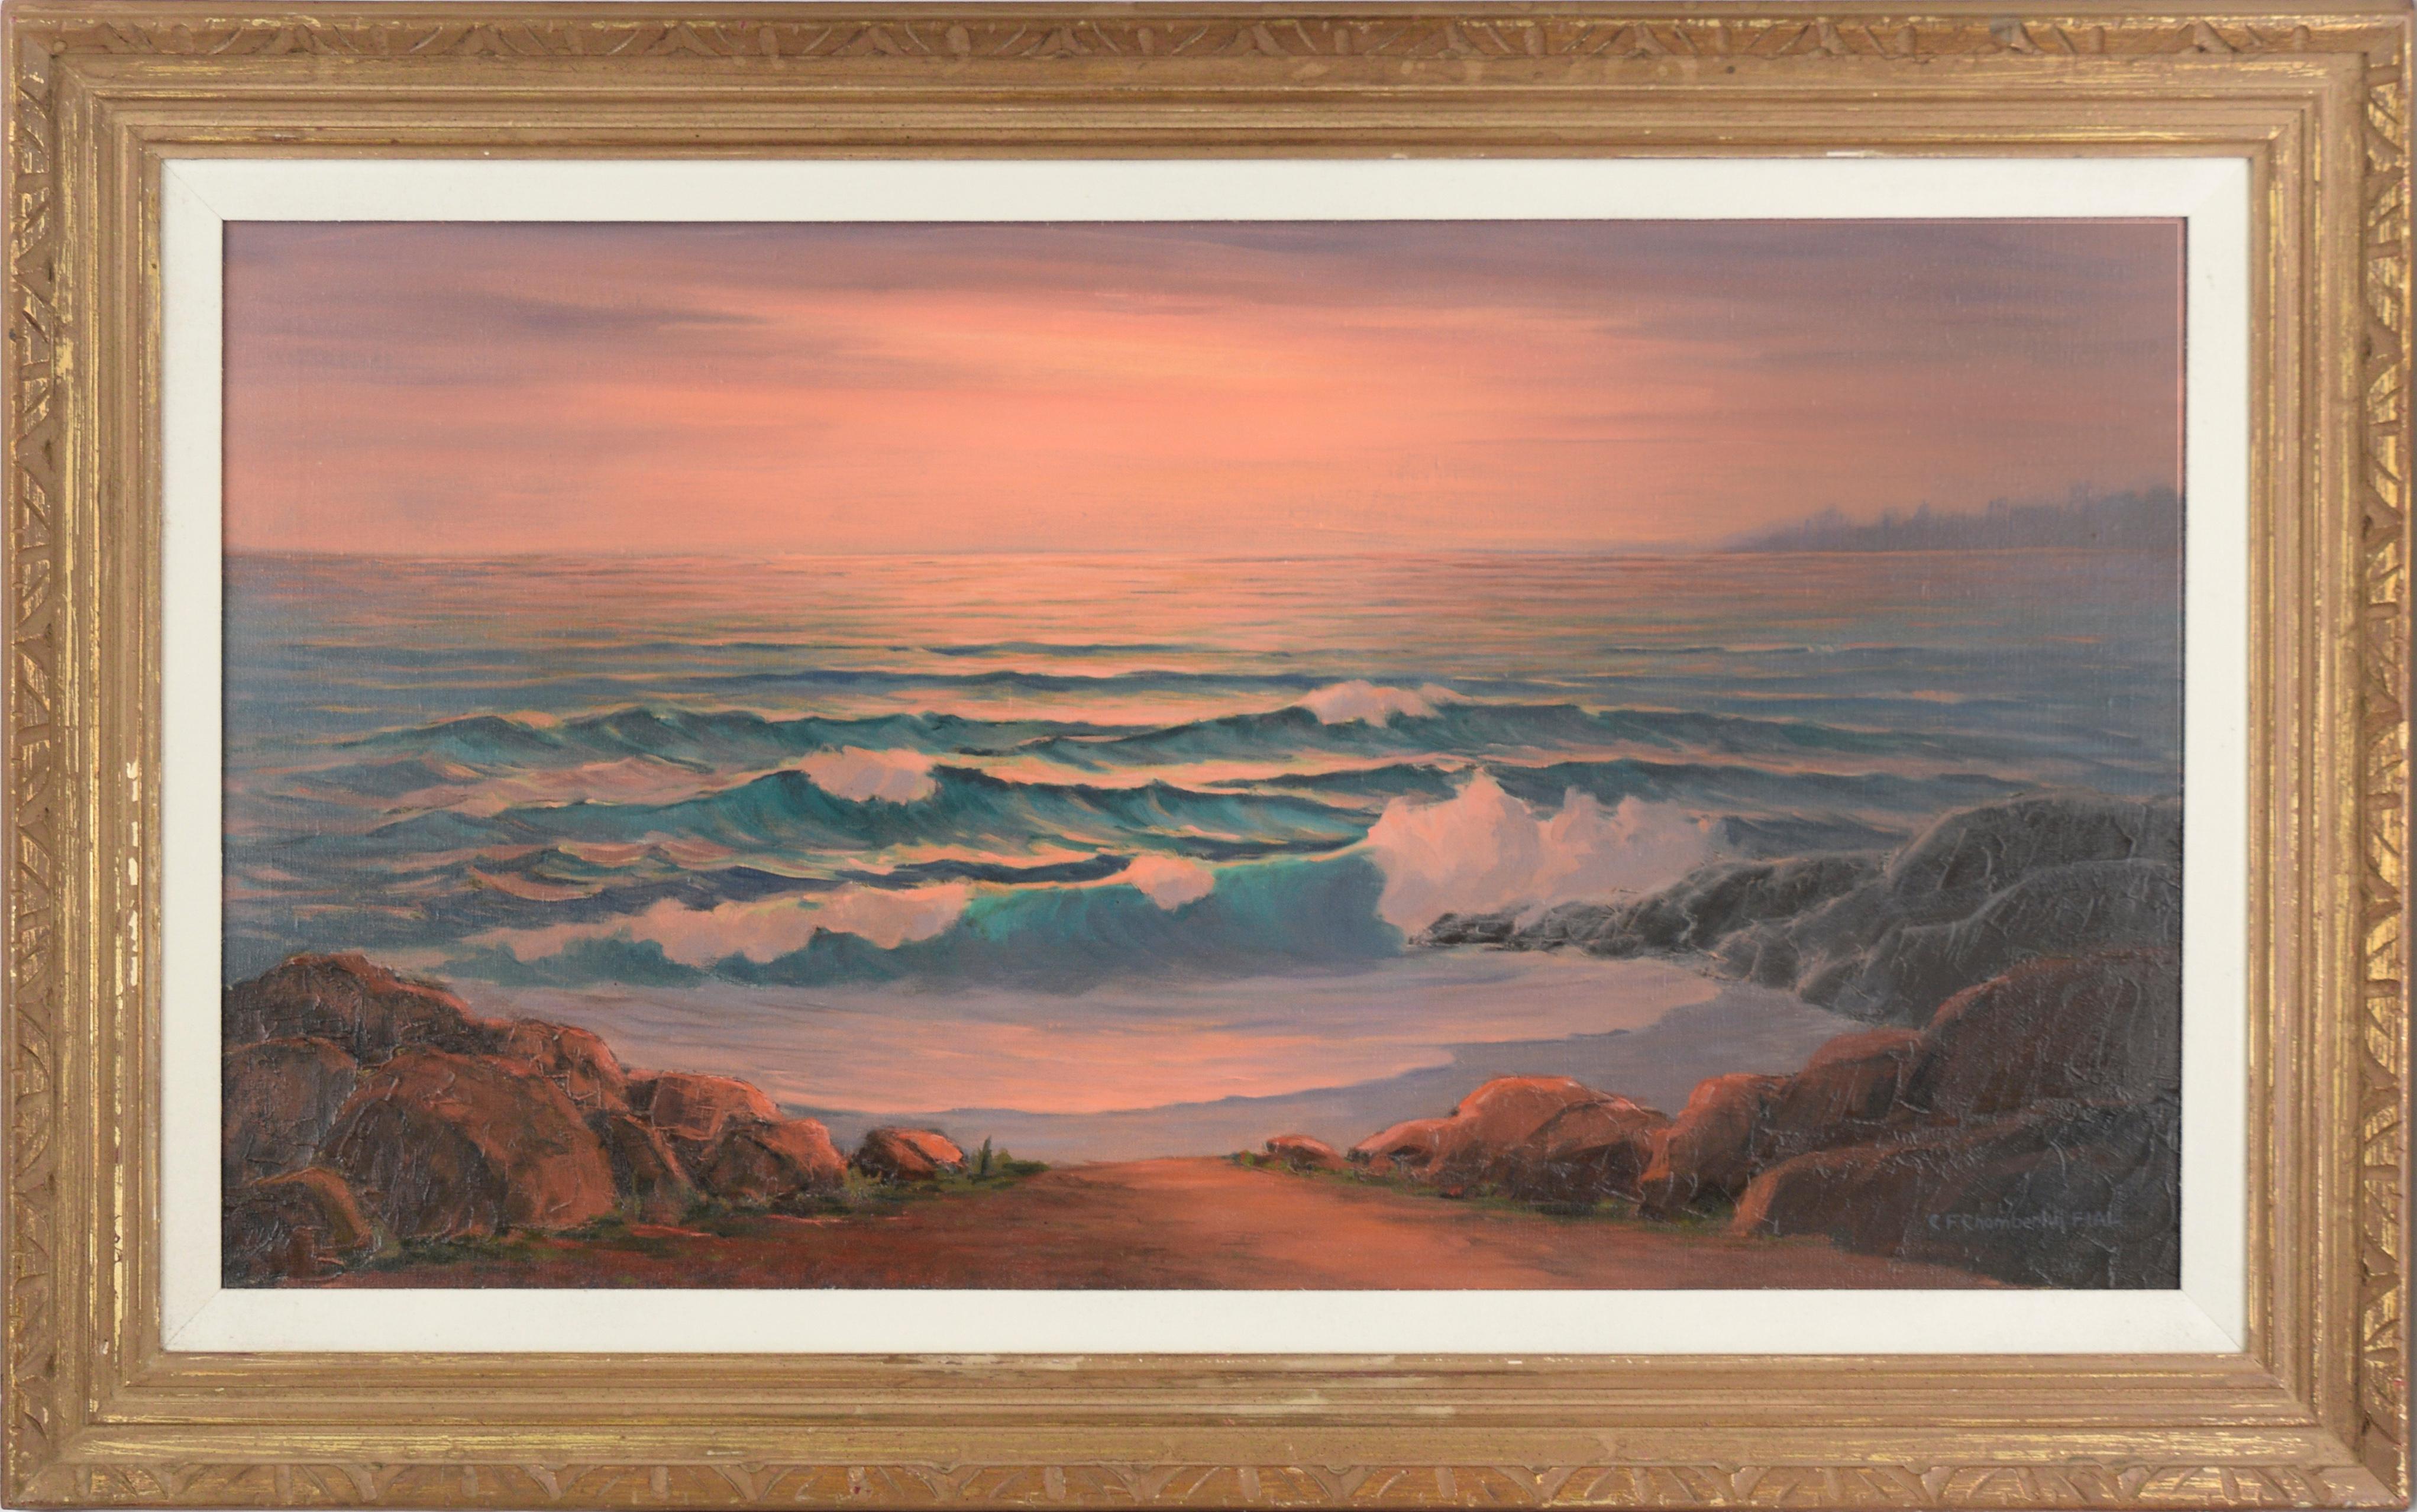 Cecil F. Chamberlin Landscape Painting - "Golden Sunset" - Seascape Near Manresa